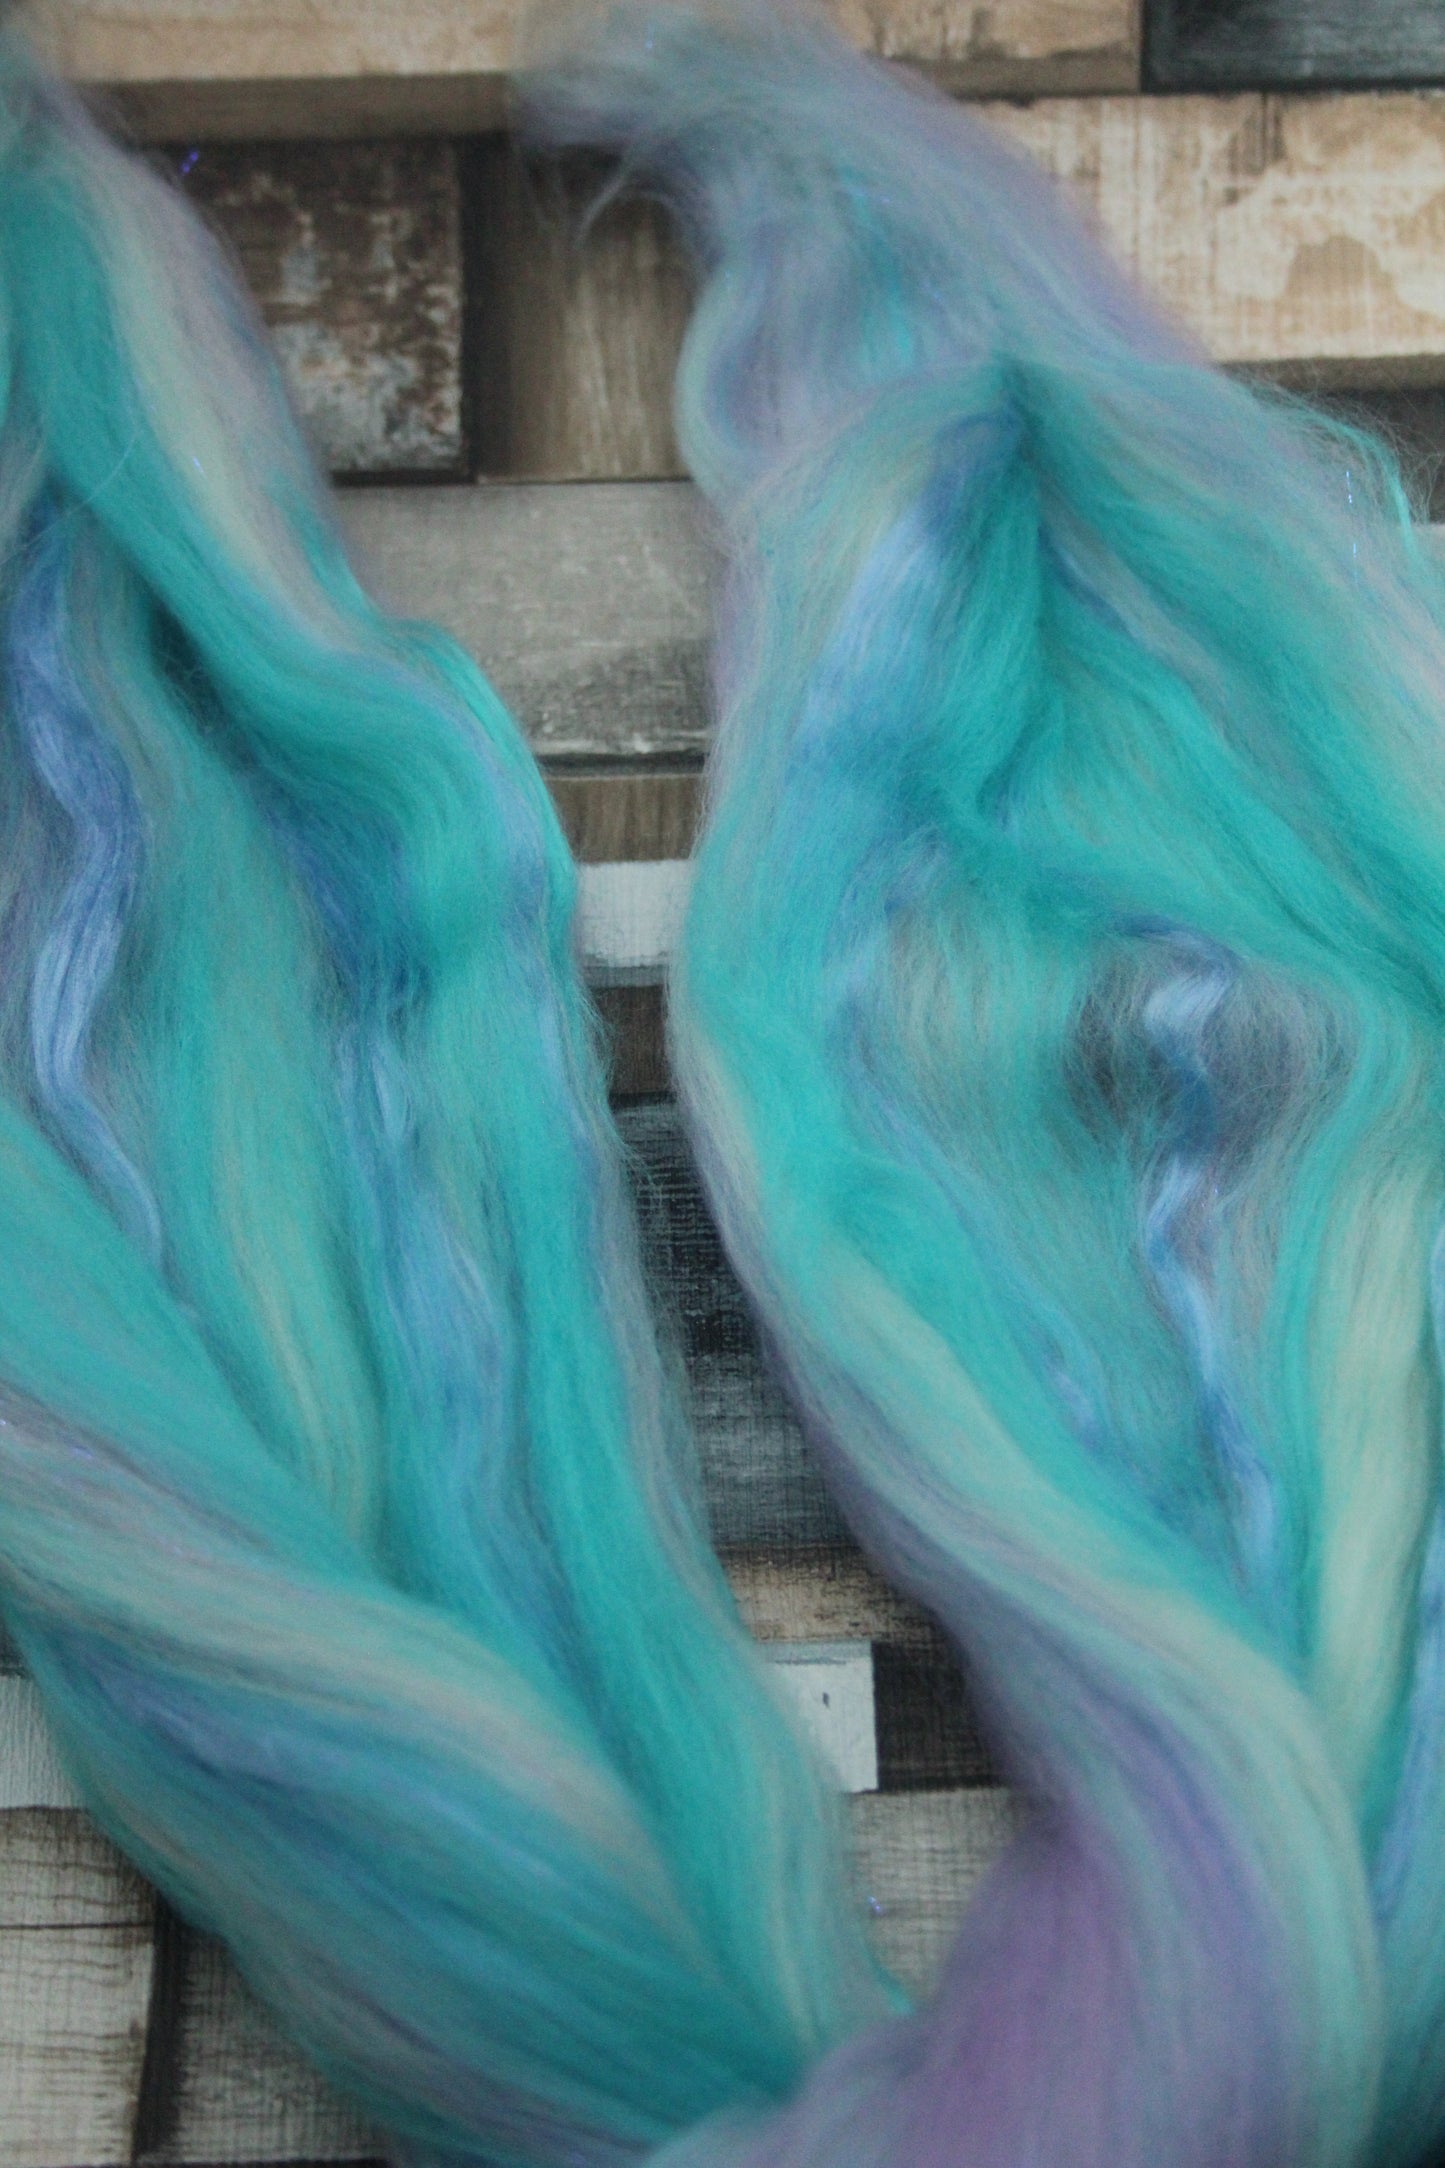 Merino Wool Blend - Purple Blue Pink - 24 grams / 0.8 oz  - Fibre for felting, weaving or spinning